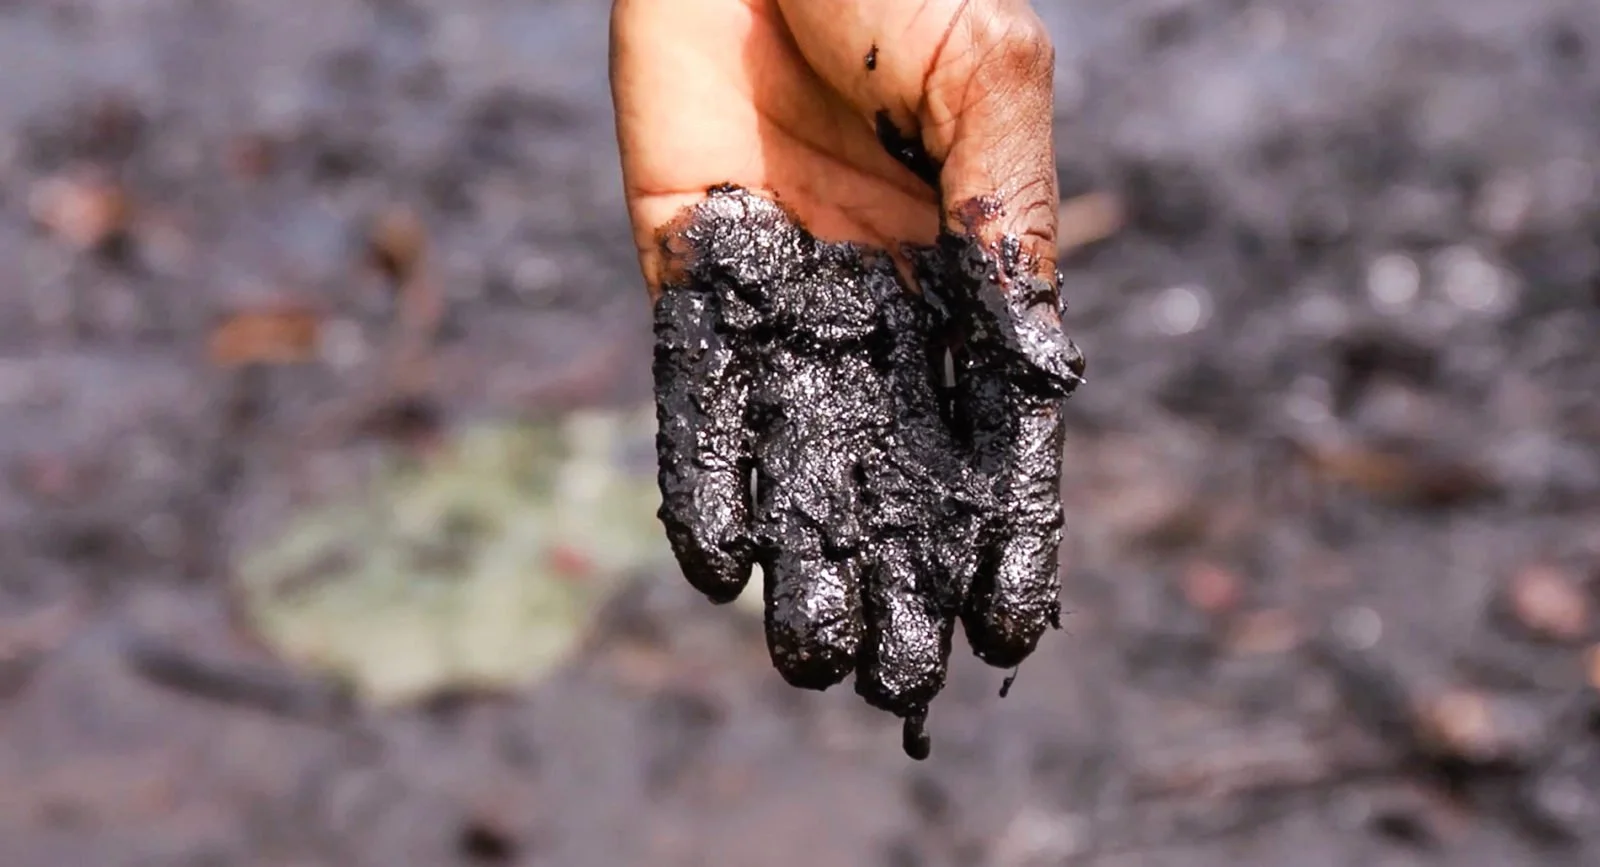 Pastor Christian Lekoya Kpandei's hand covered in oily mud, Bodo Creek, Nigeria, 2011